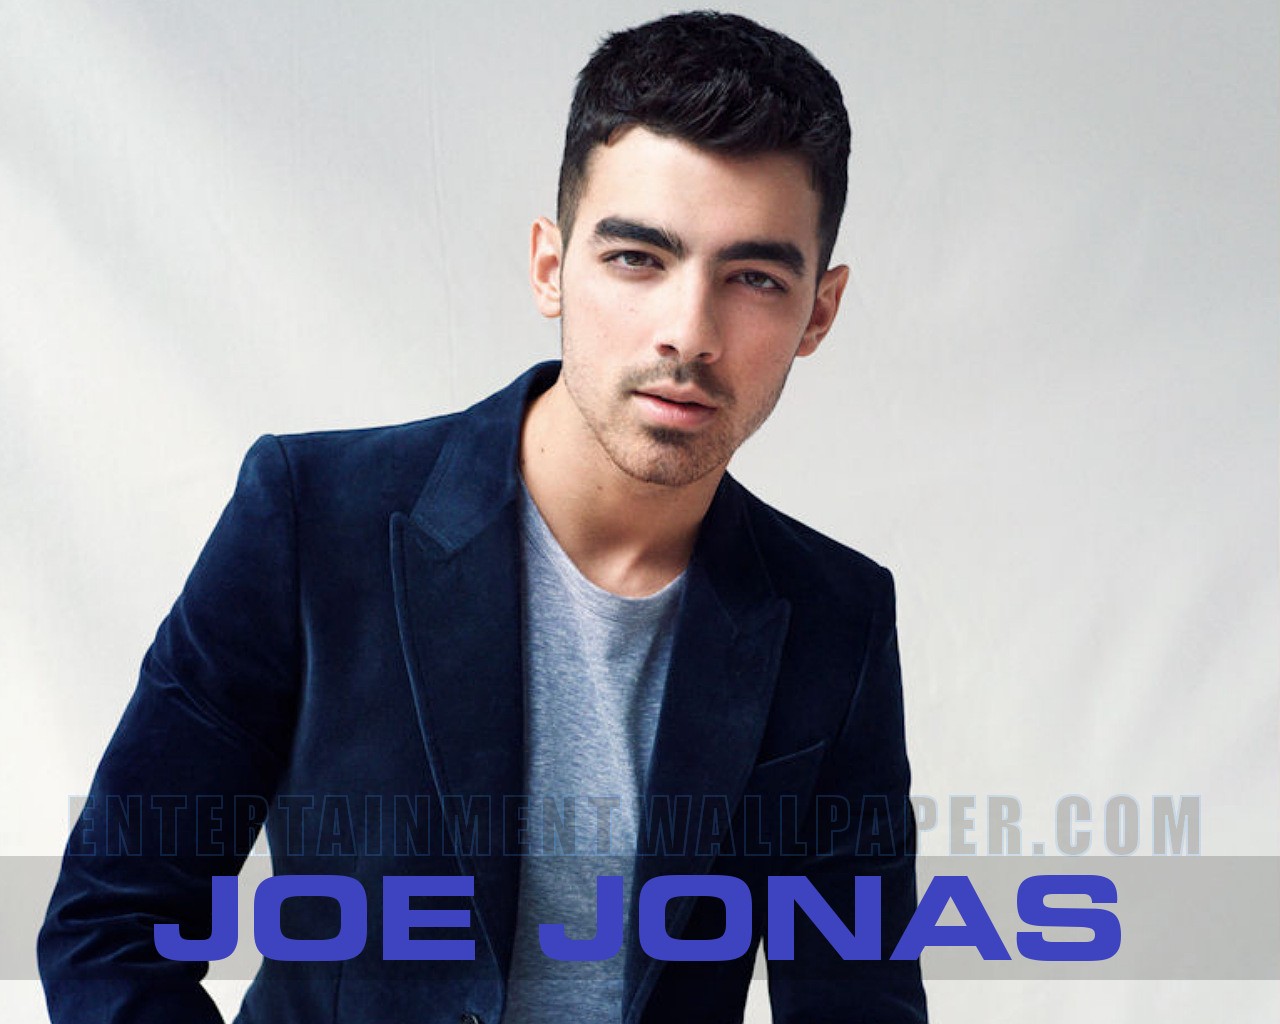 Joe Jonas Image HD Wallpaper And Background Photos